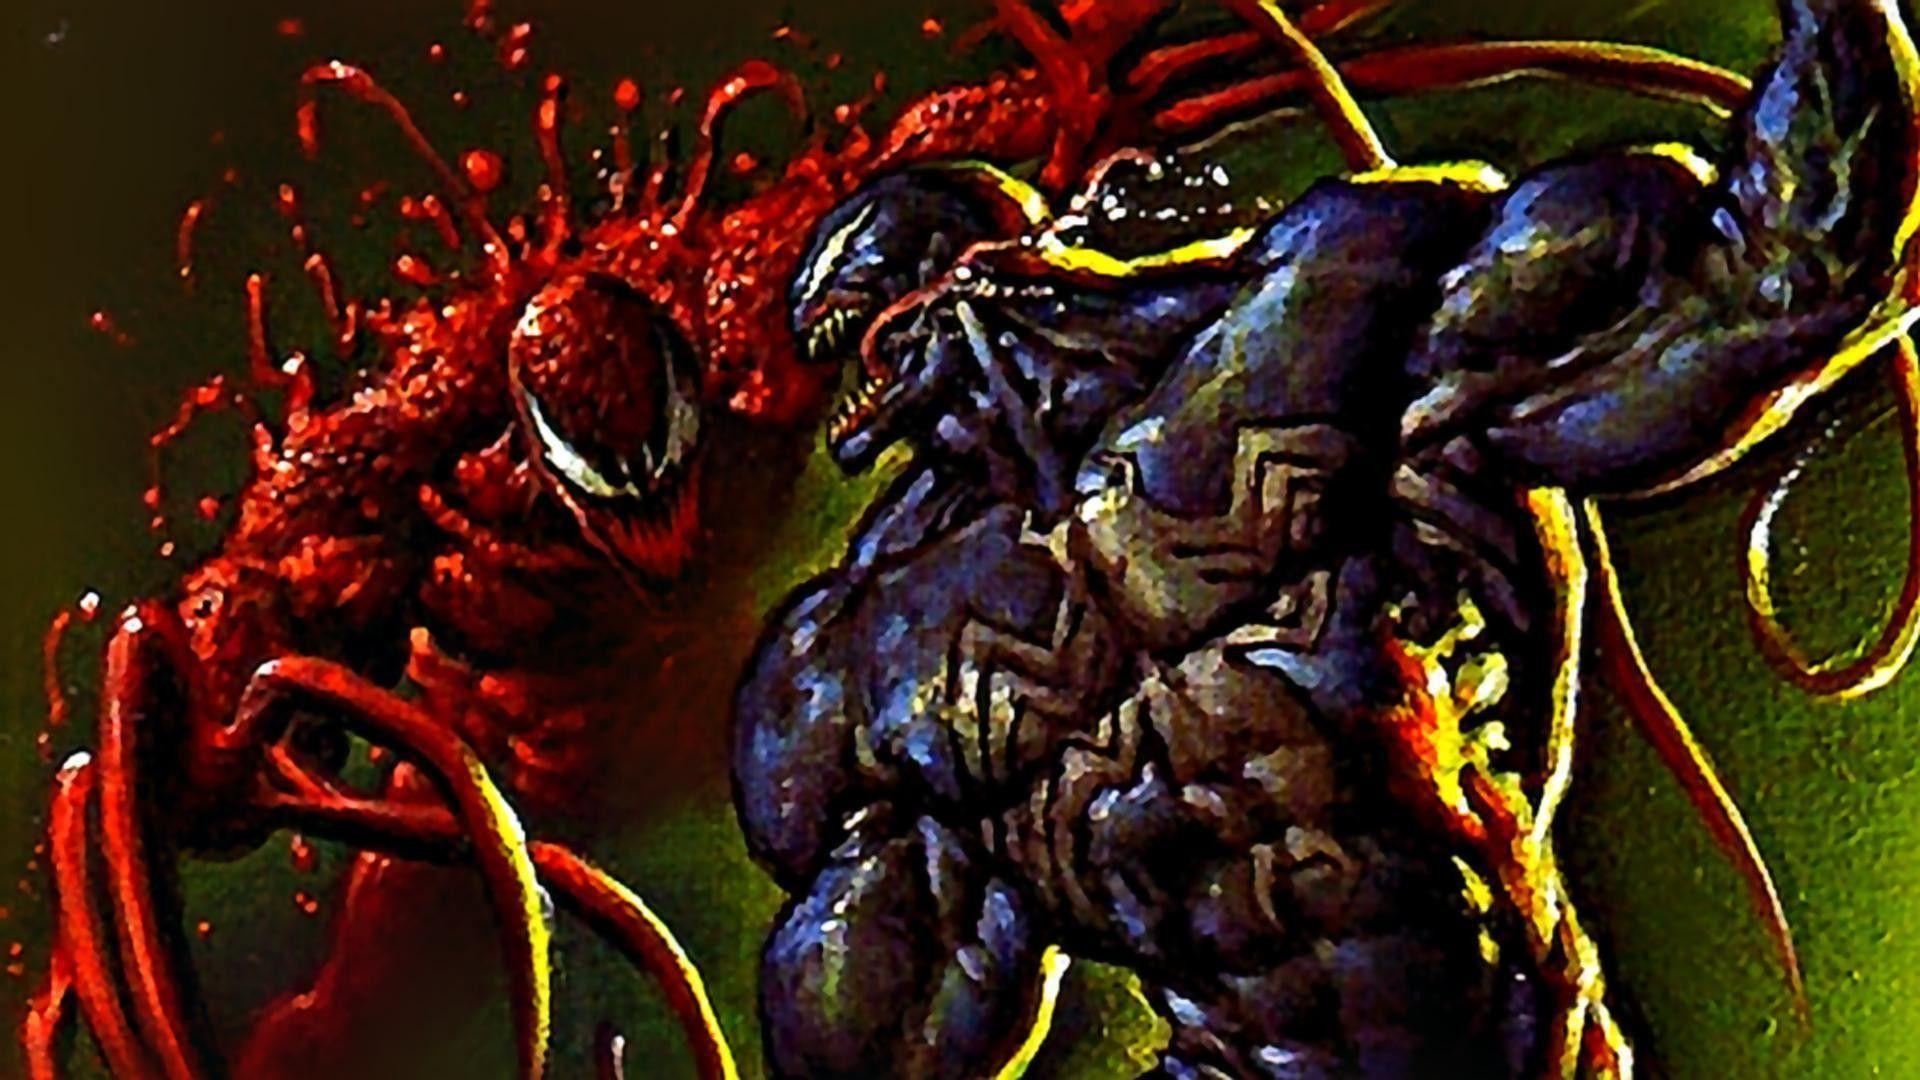 Wallpaper Venom Spiderman Venom Carnage Carnage Poster Background   Download Free Image